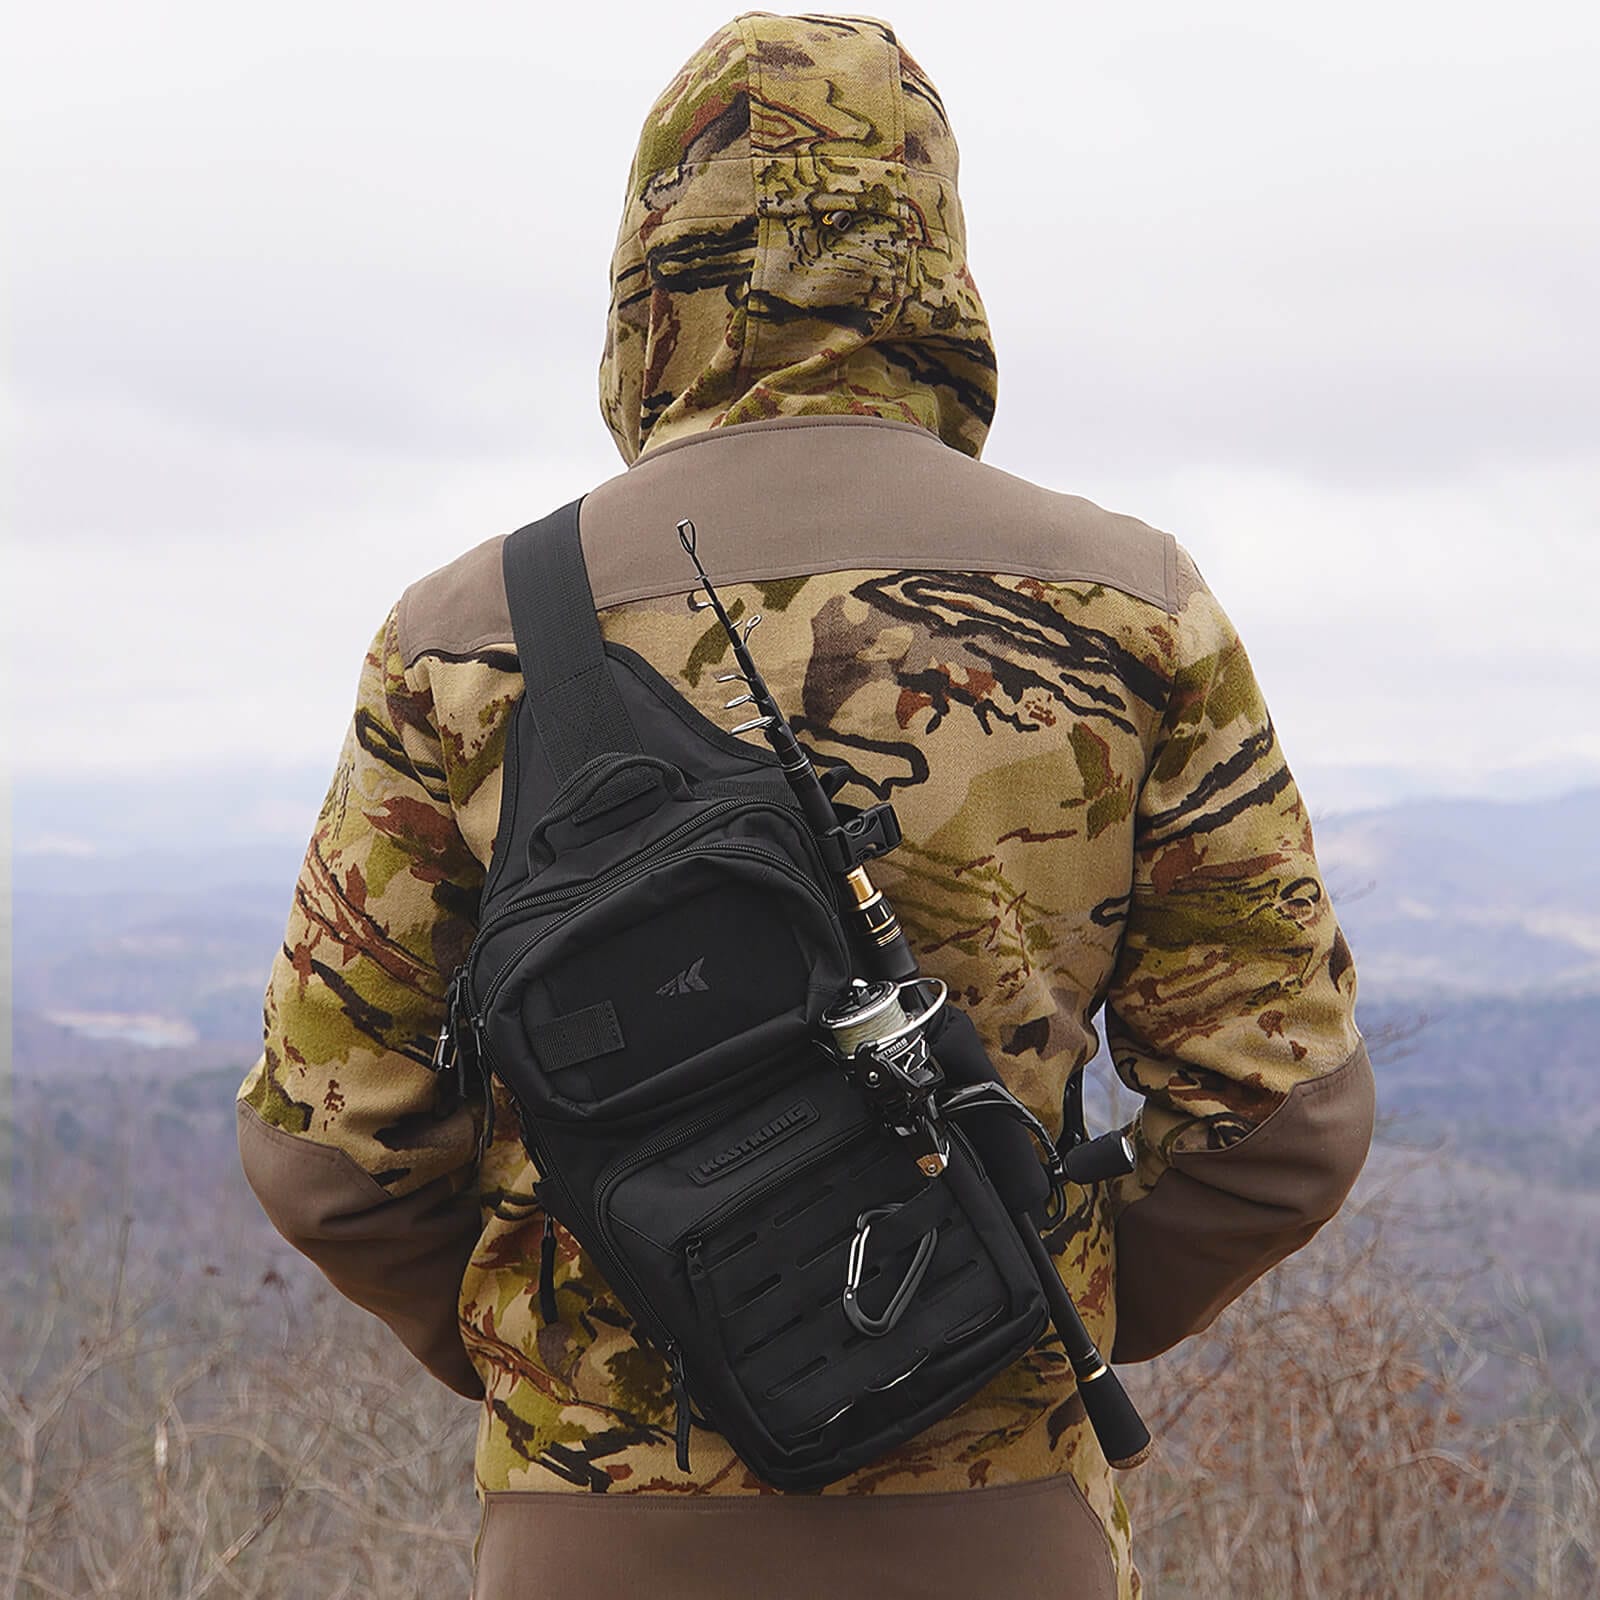 KastKing BlowBak Tactical Fishing Sling Tackle Storage Bag – Lightweight Sling Fishing Backpack - Sling Tool Bag for Fishing Hiking Hunting Camping